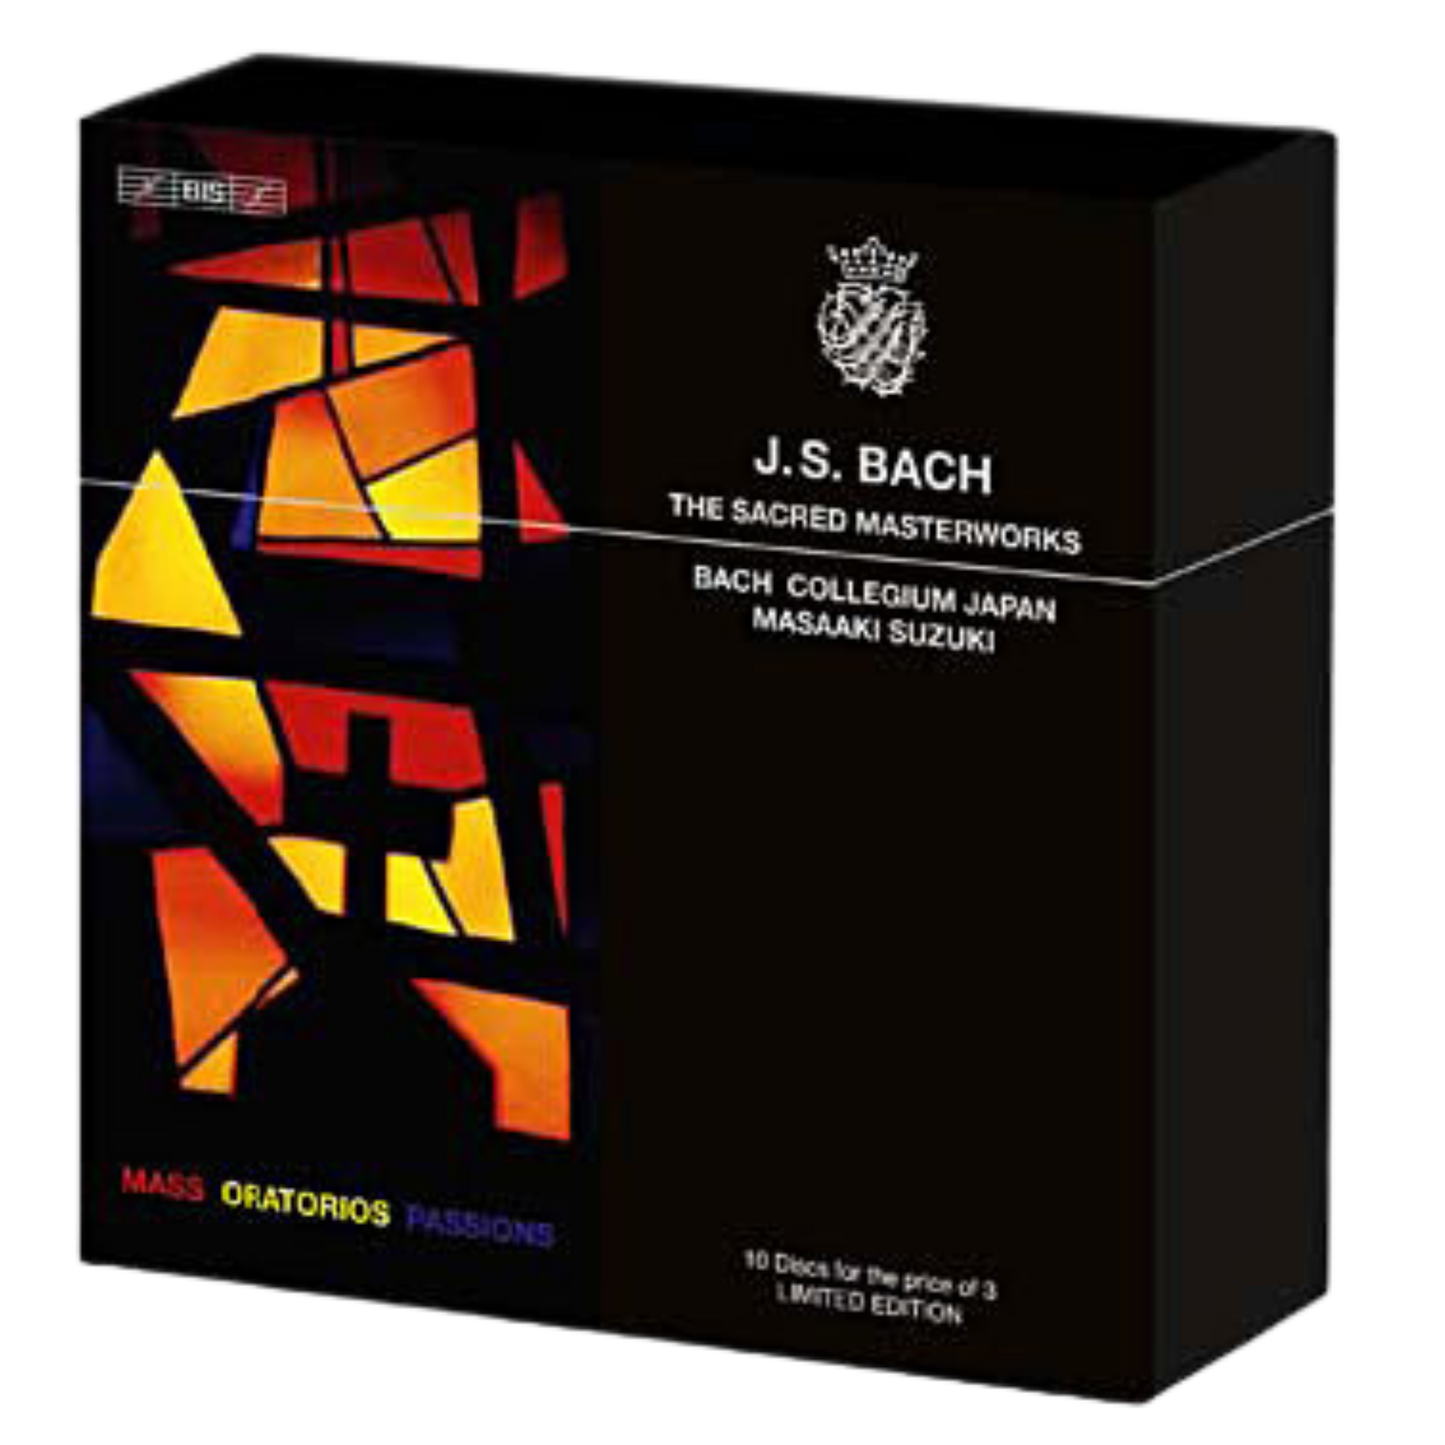 BACH, J. S.: The Sacred Masterworks - Bach Collegium Japan, Suzuki (10 CDs)